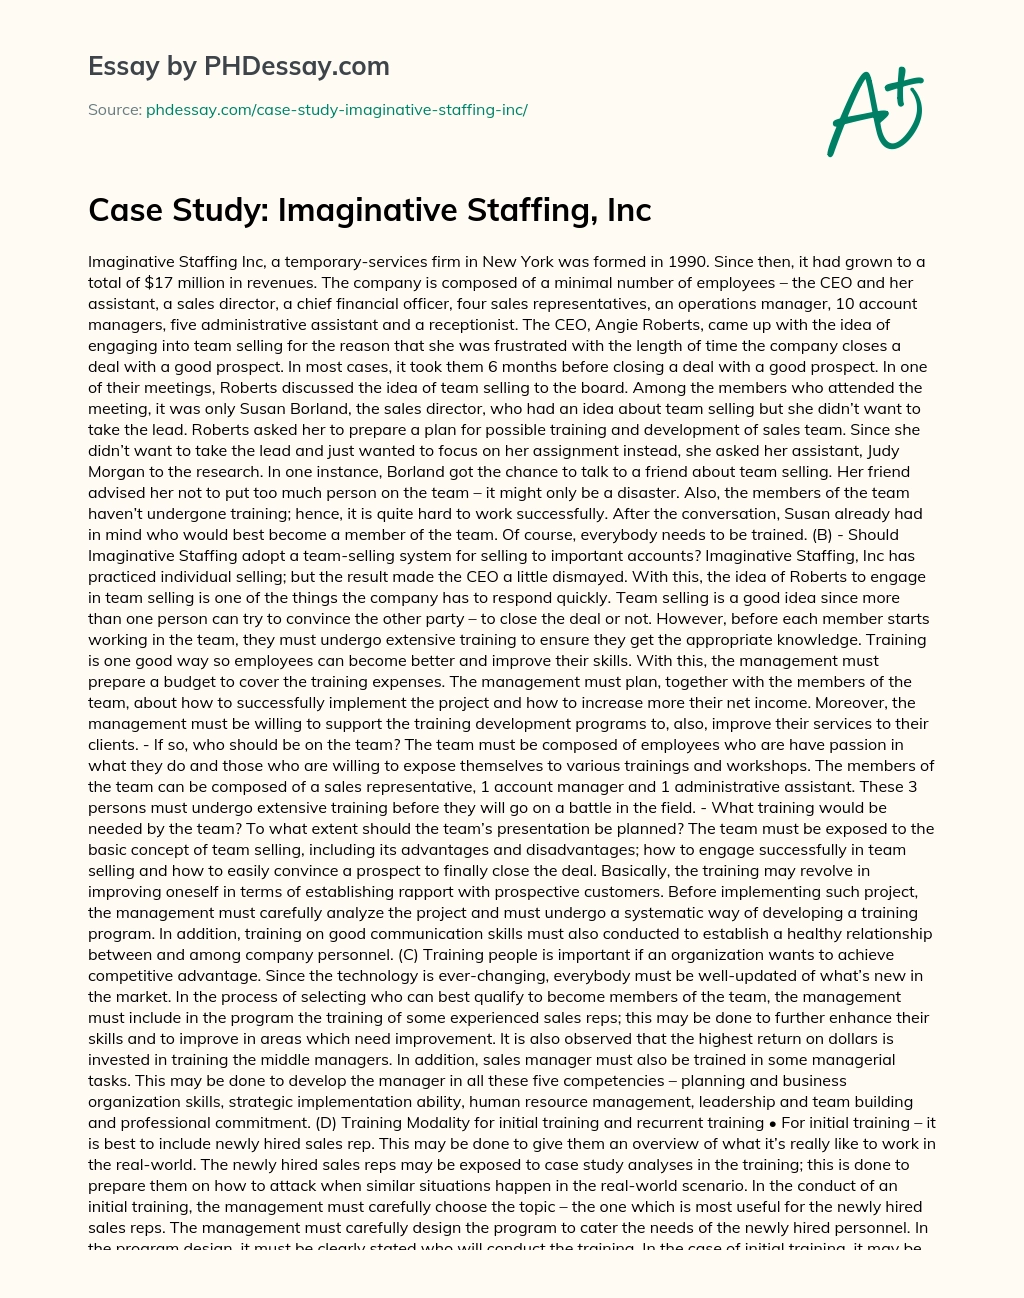 Case Study: Imaginative Staffing, Inc essay